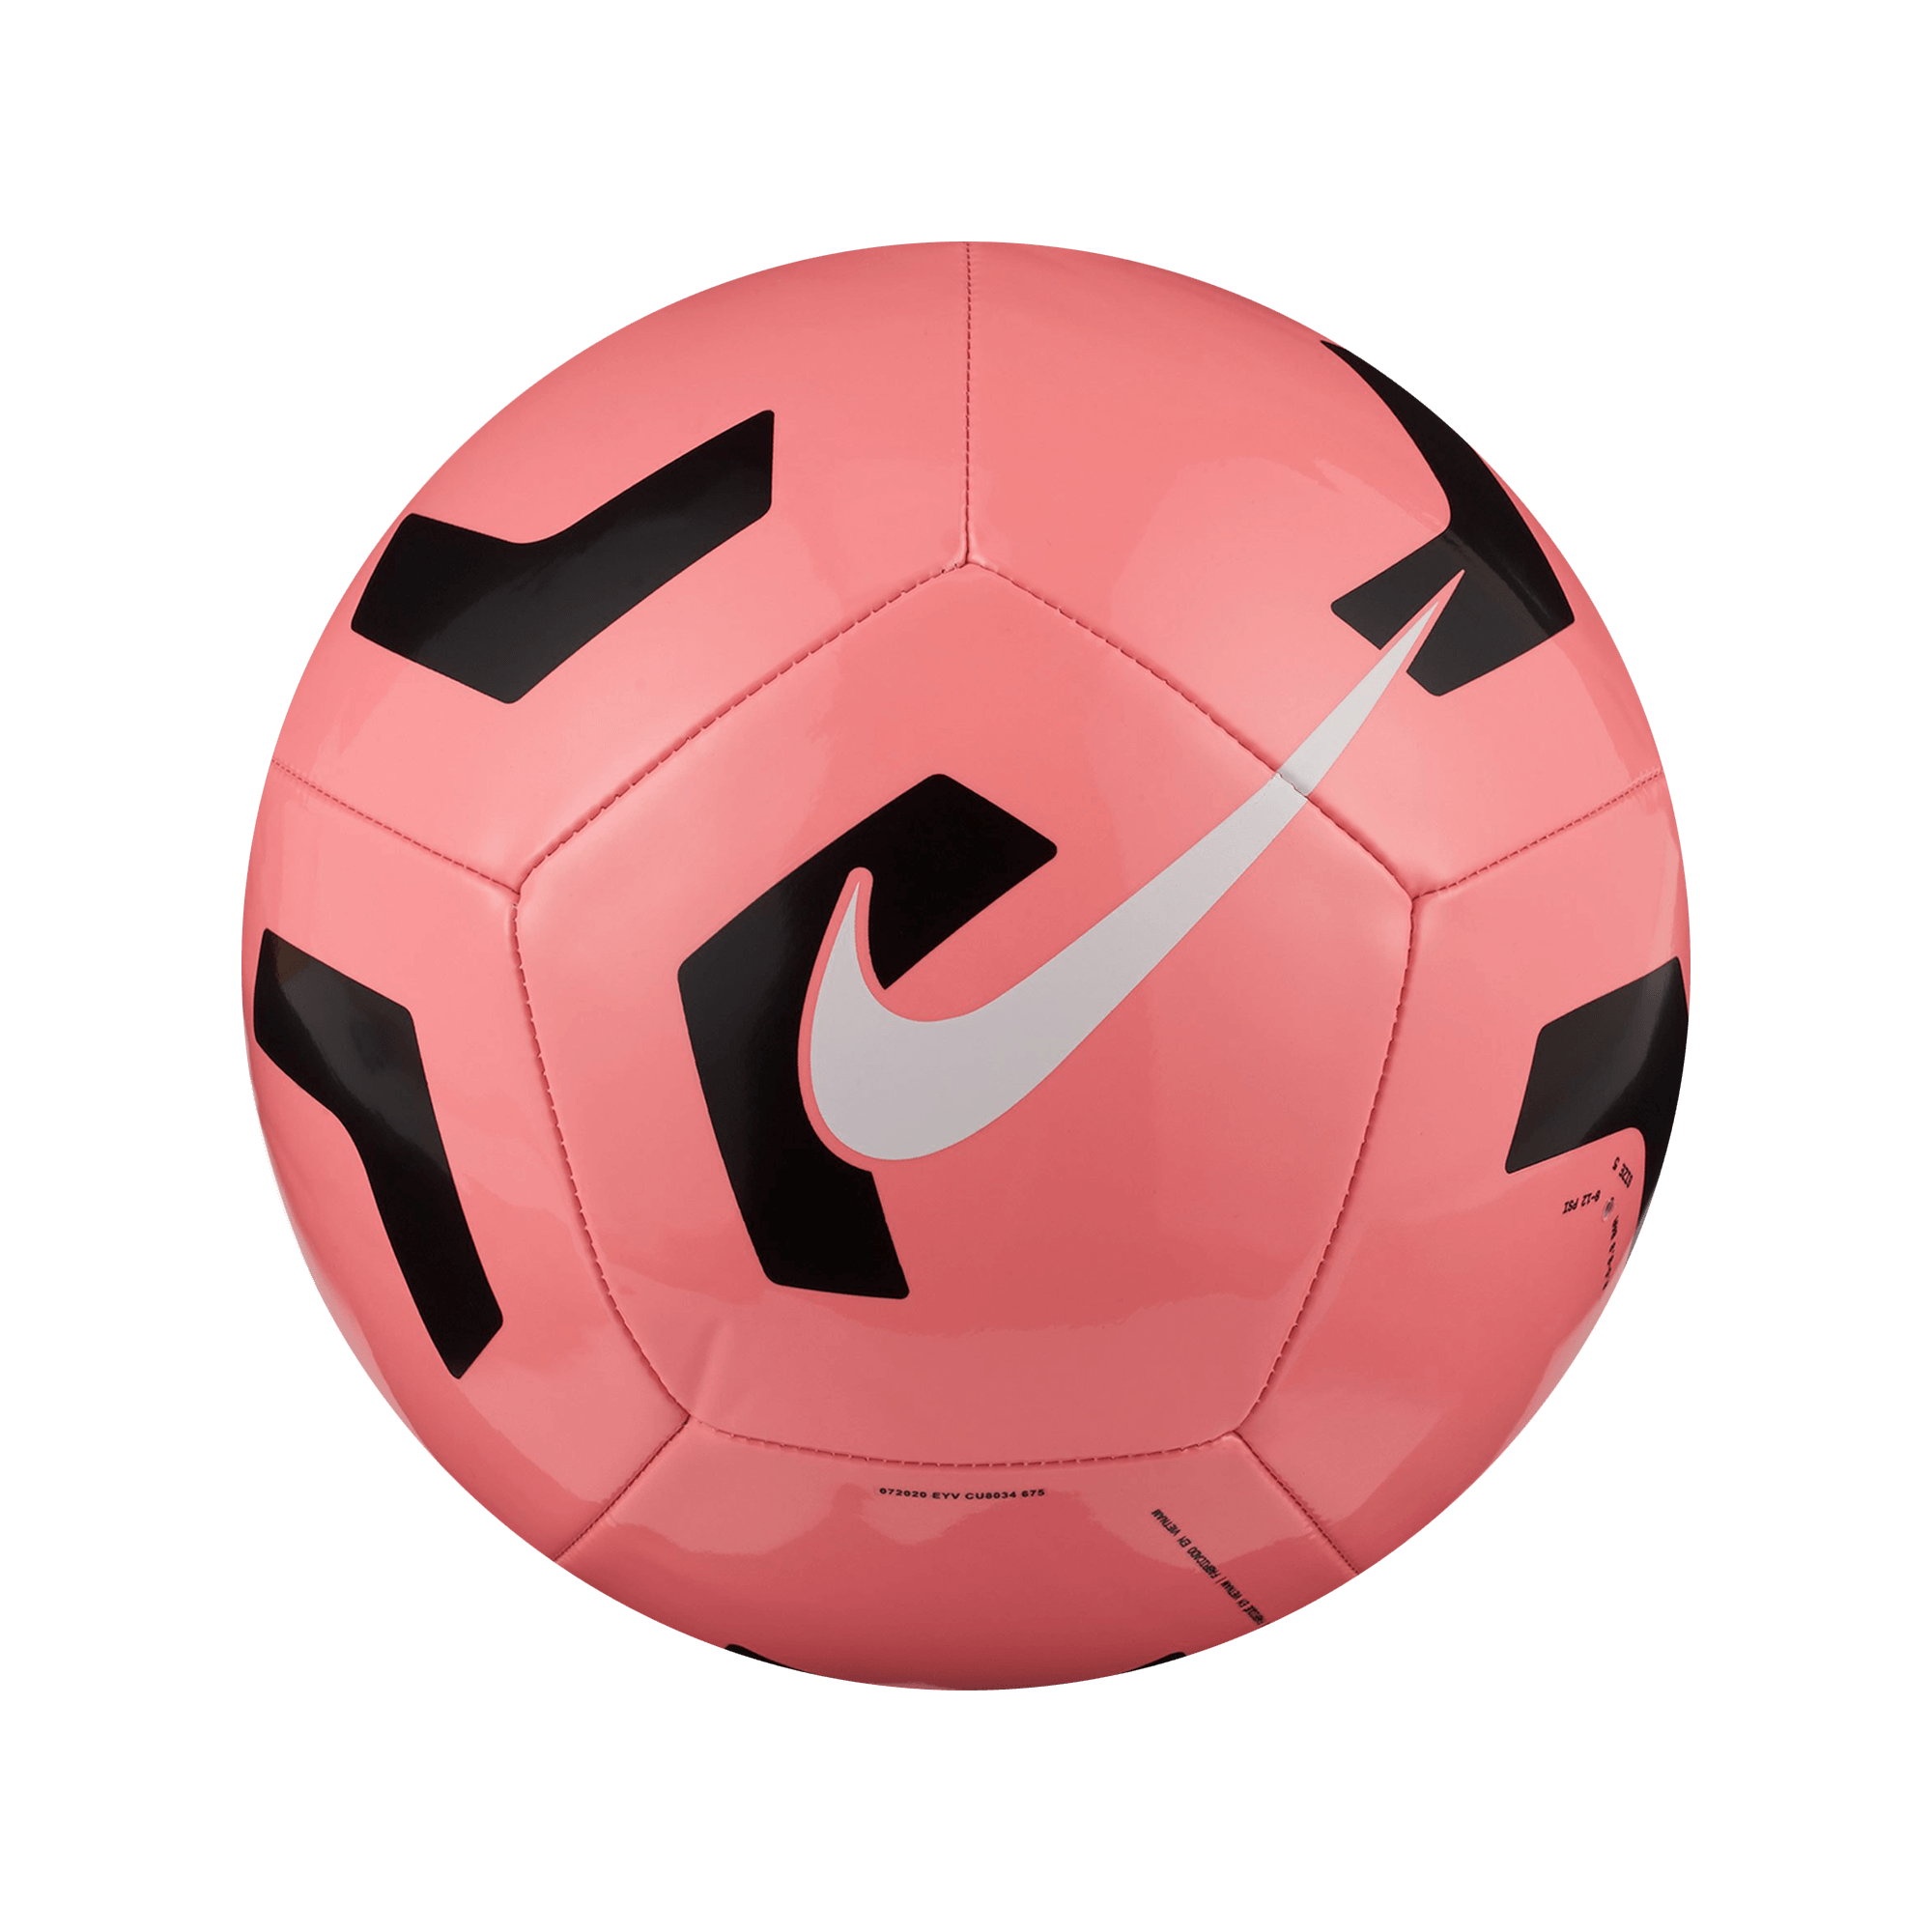 Balón Nike Futbol Pitch Training Unisex | Martí tienda linea - Martí MX